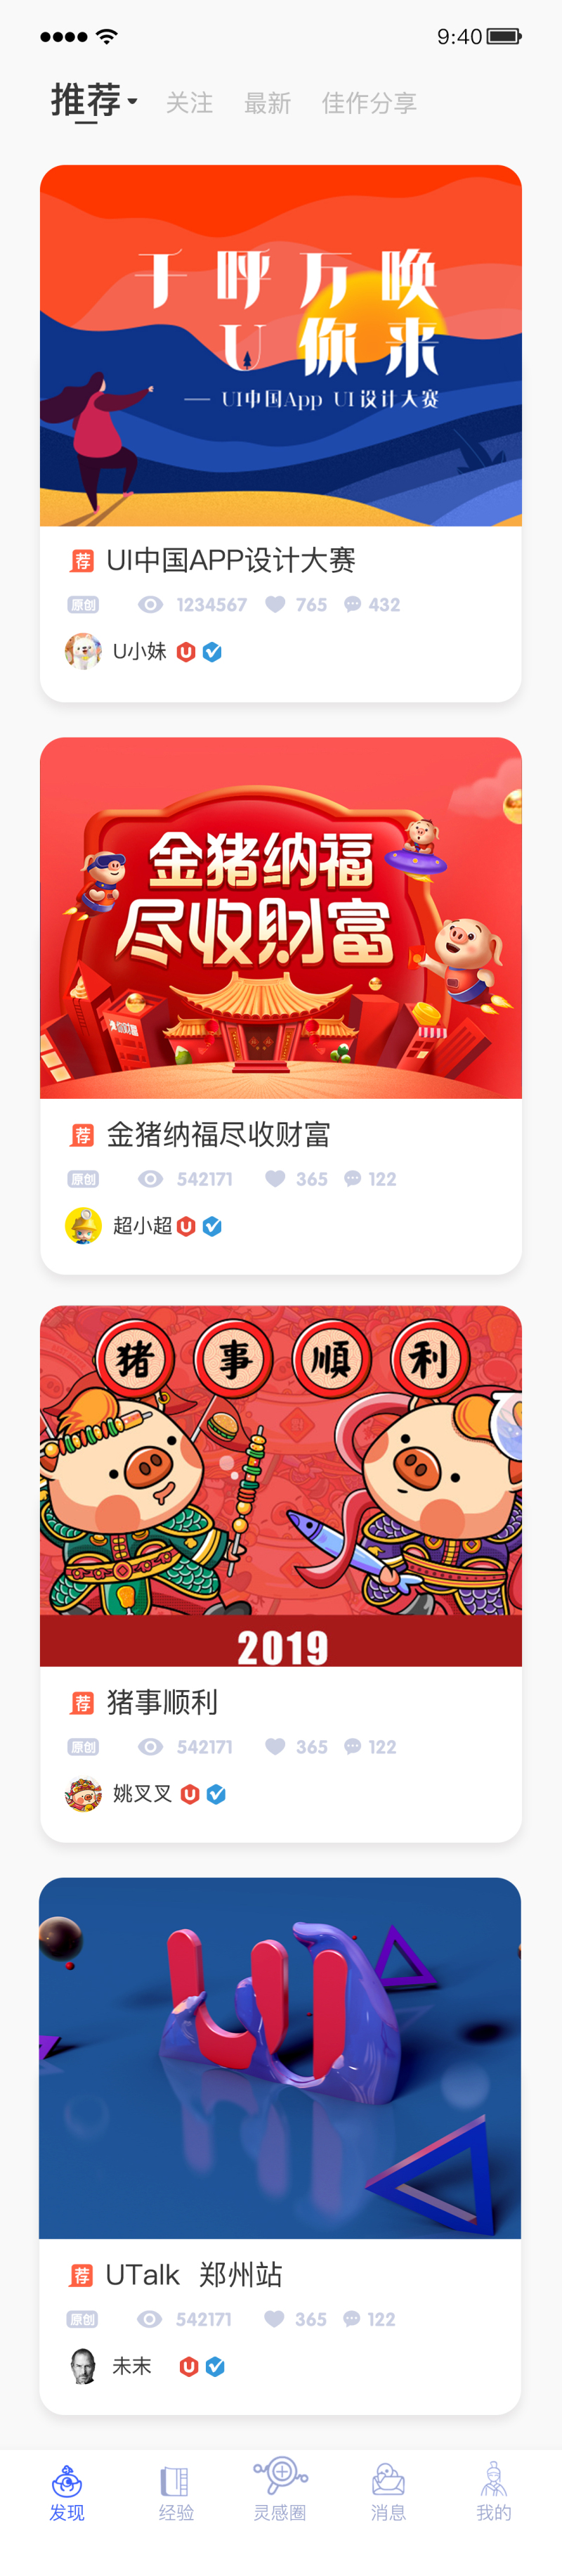 UI中国app移动版提案